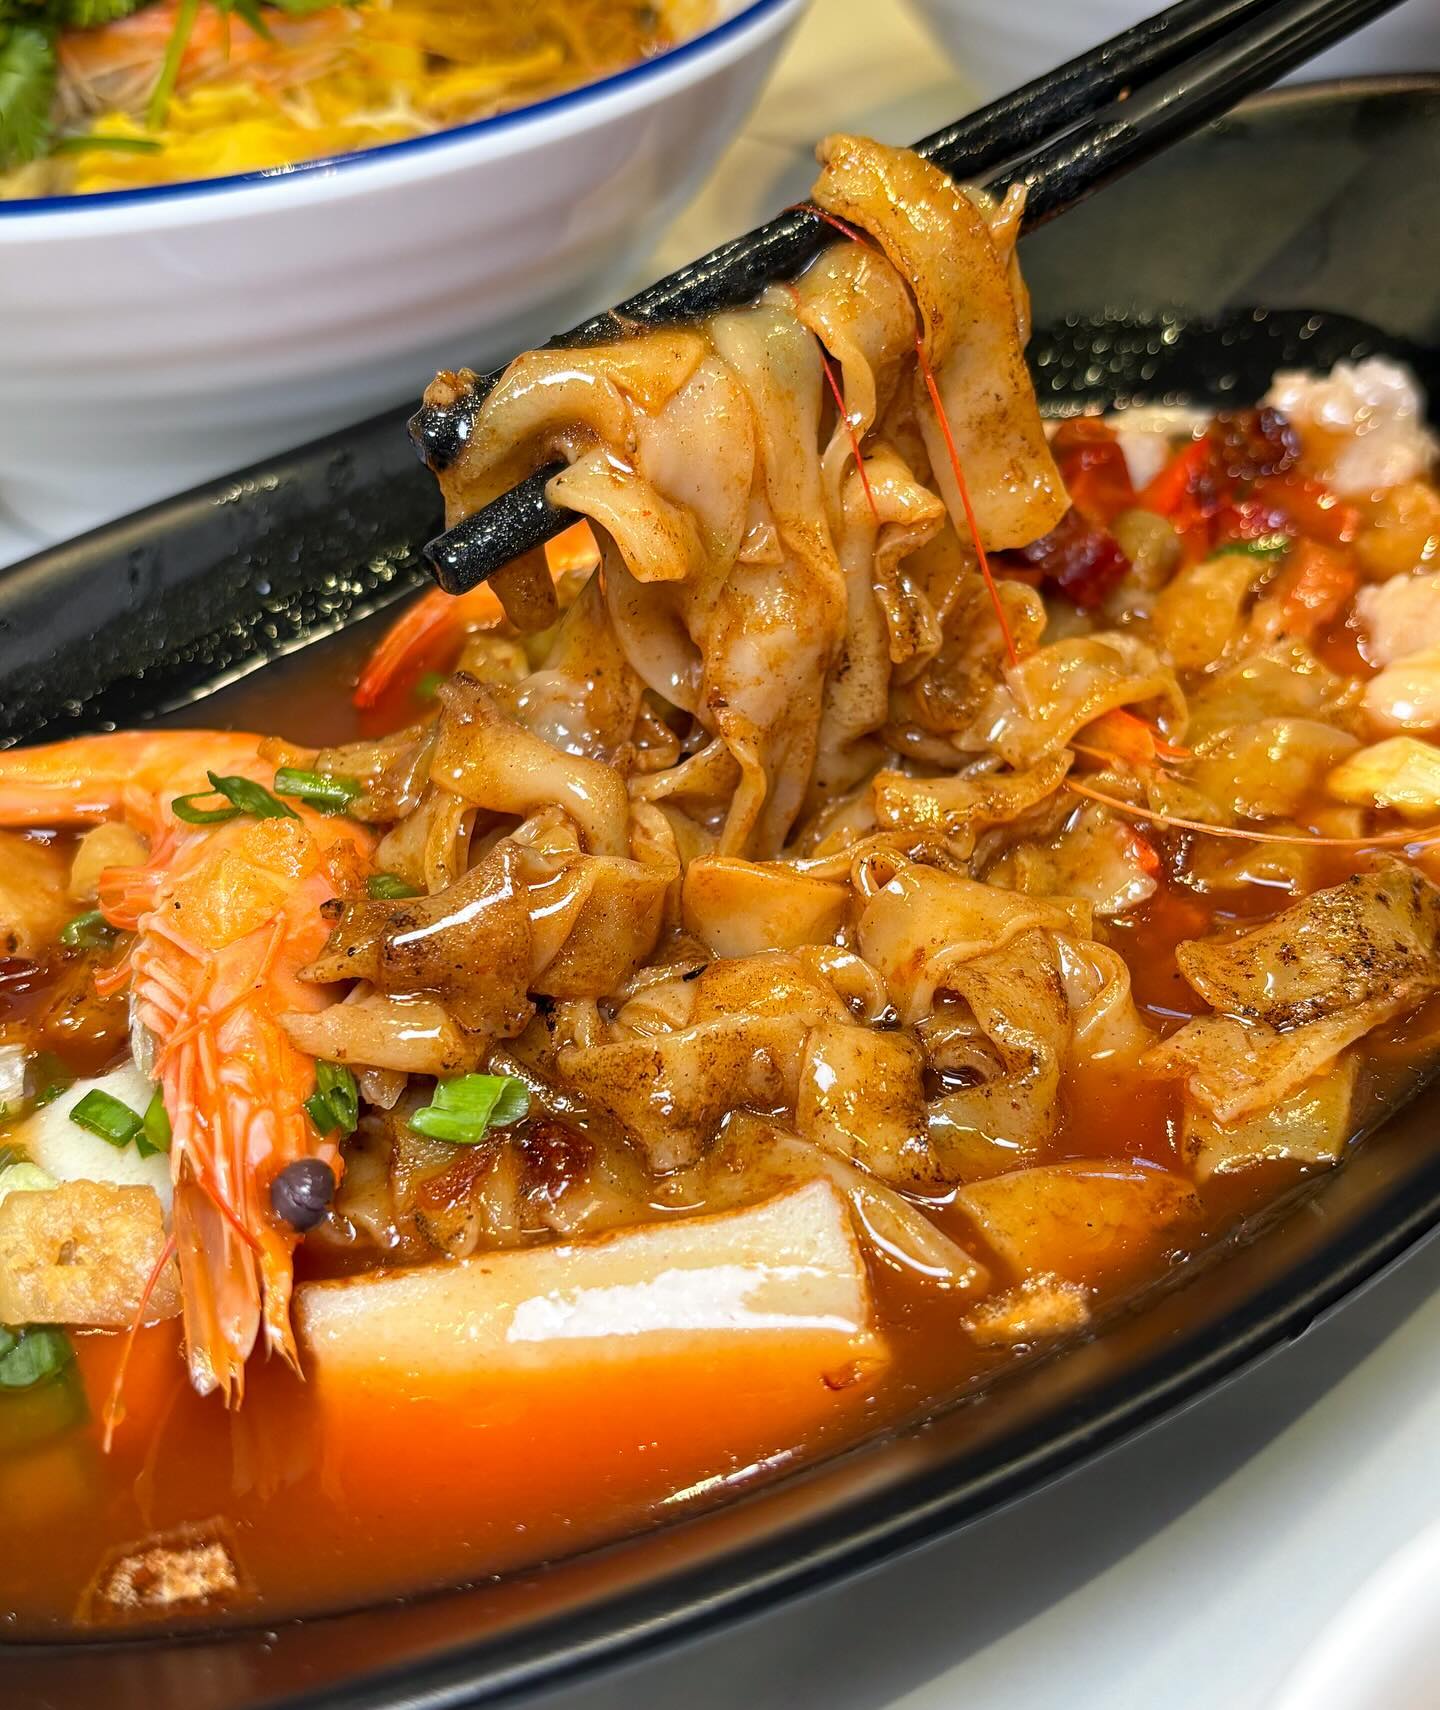 tracy's sarawak kitchen - tomato wok hey kuey teow